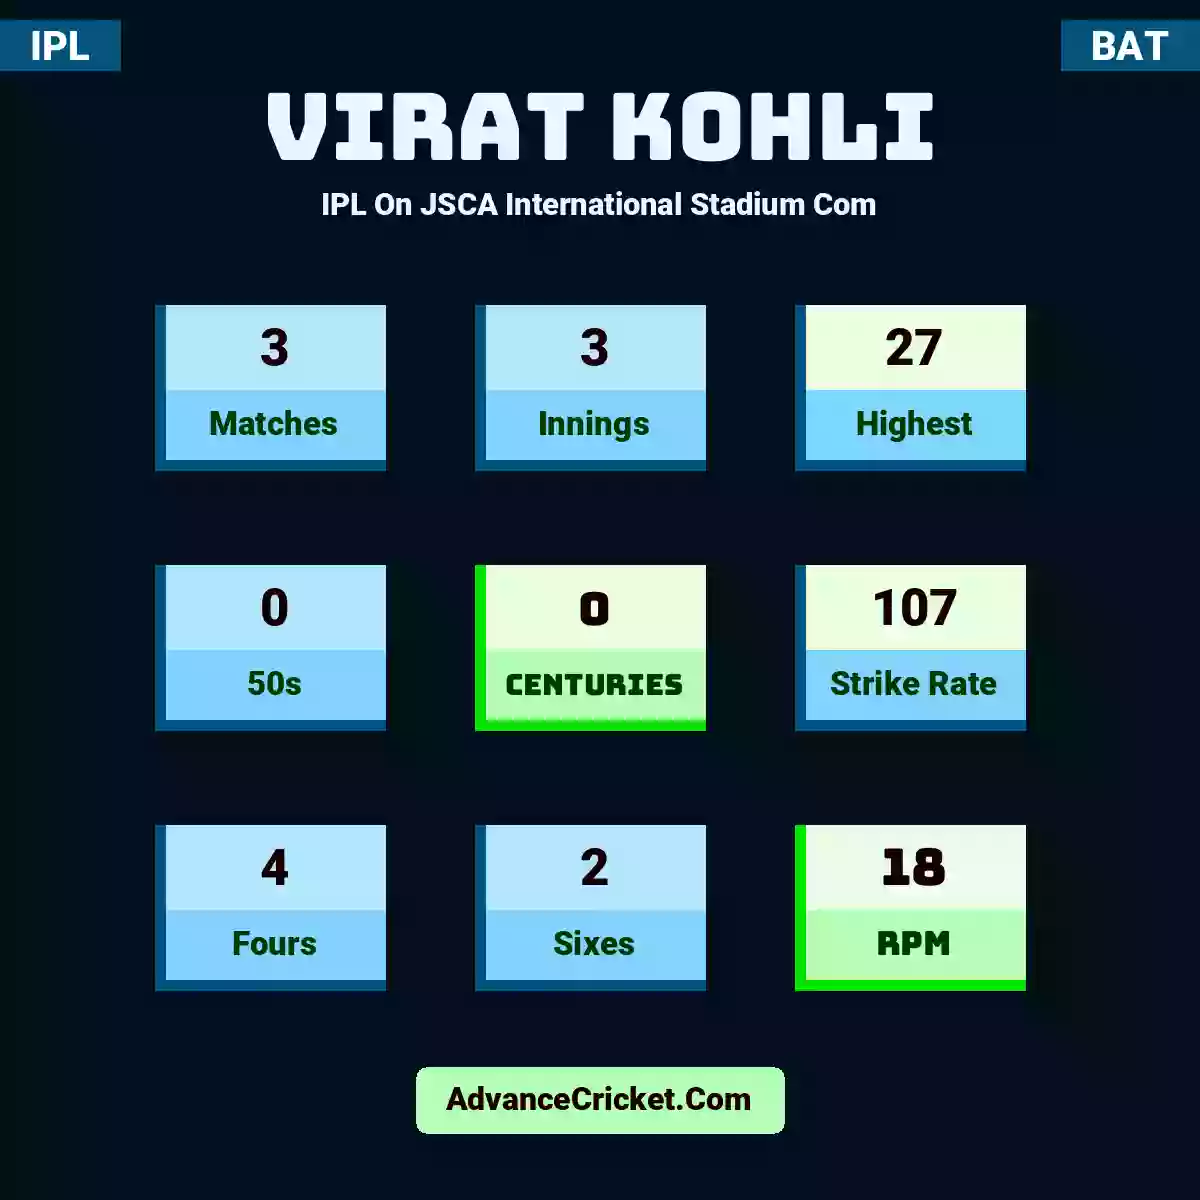 Virat Kohli IPL  On JSCA International Stadium Com, Virat Kohli played 3 matches, scored 27 runs as highest, 0 half-centuries, and 0 centuries, with a strike rate of 107. V.Kohli hit 4 fours and 2 sixes, with an RPM of 18.